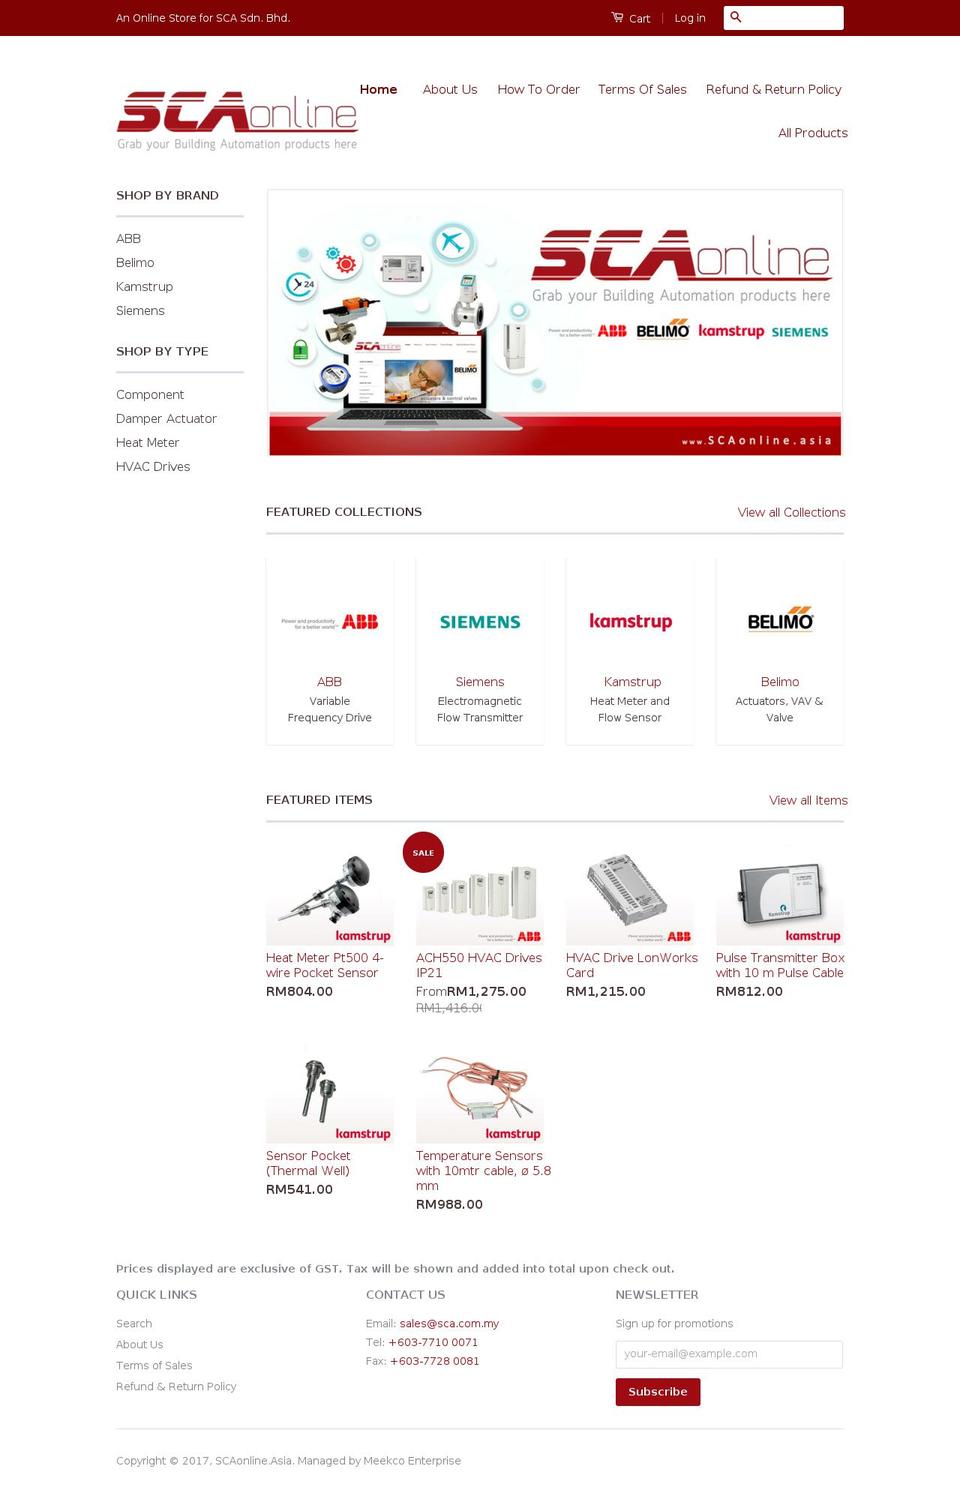 scaonline.asia shopify website screenshot